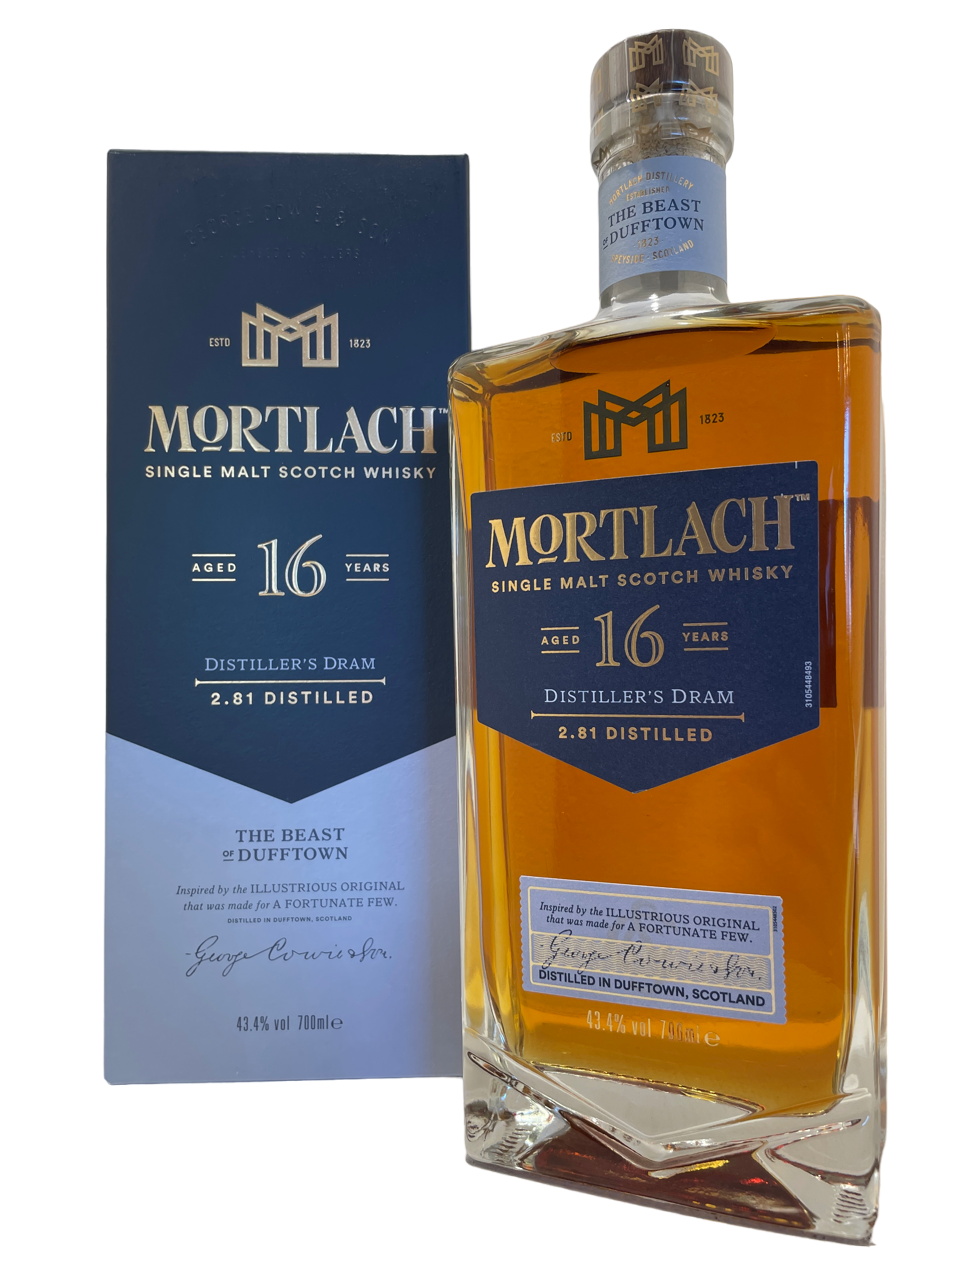 scotch whisky ecosse spirit spiritueux highland dufftown mortlach single malt 16 years old